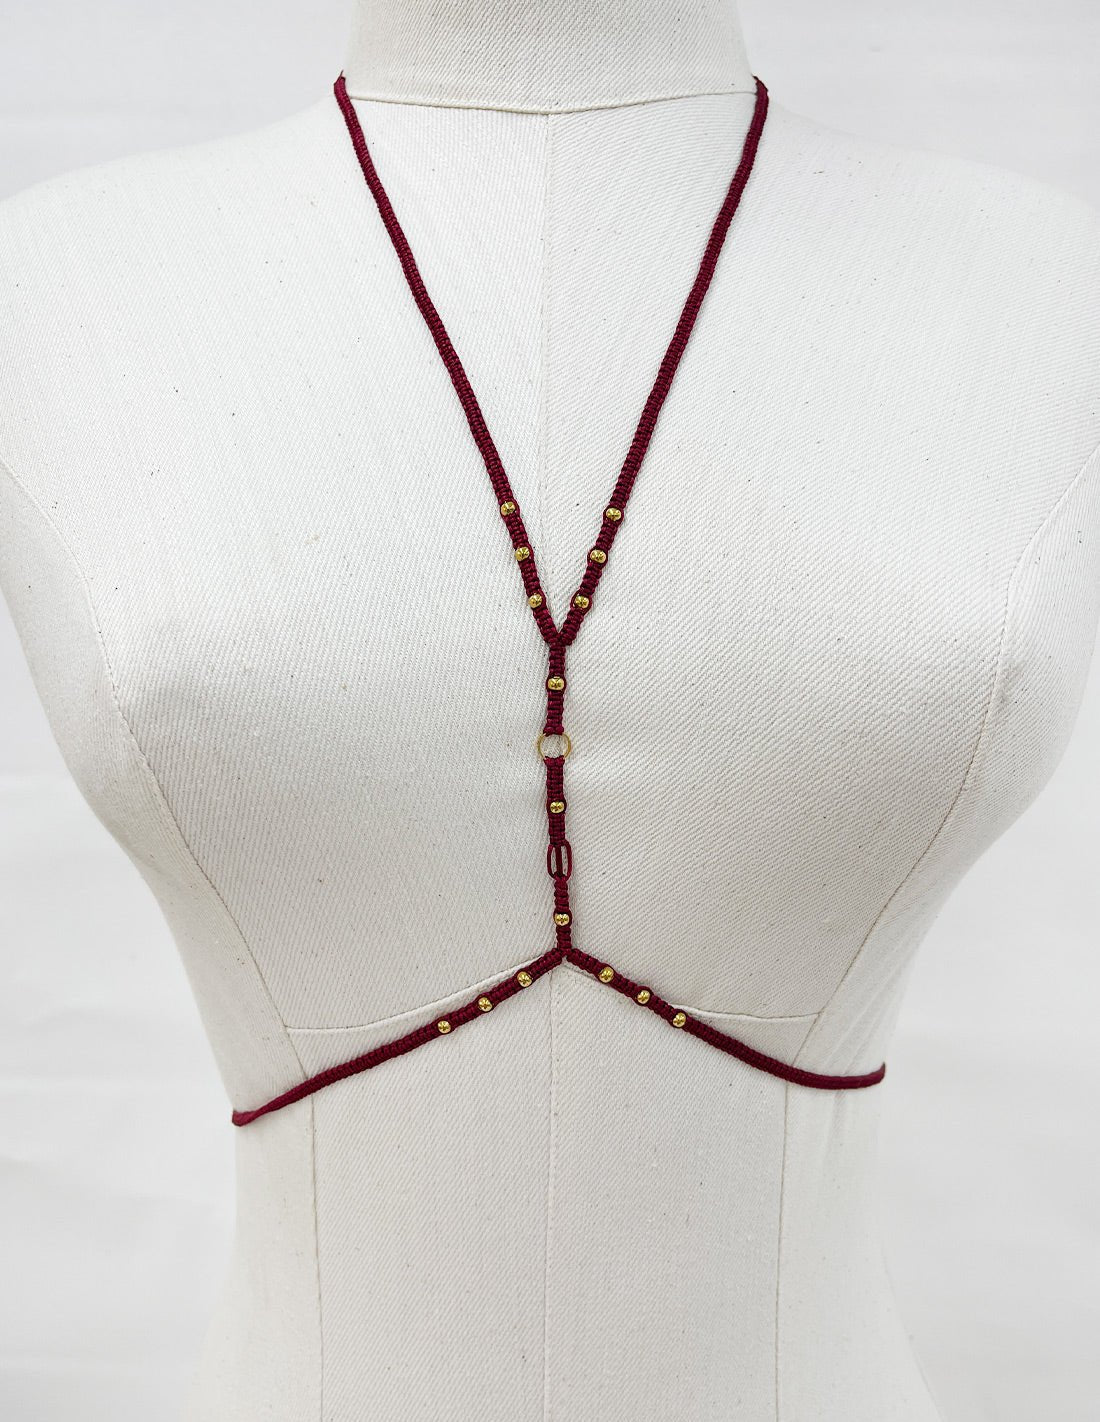 Sentellas Body Chain Red Wine - Body Chain - Entreaguas Wearable Art